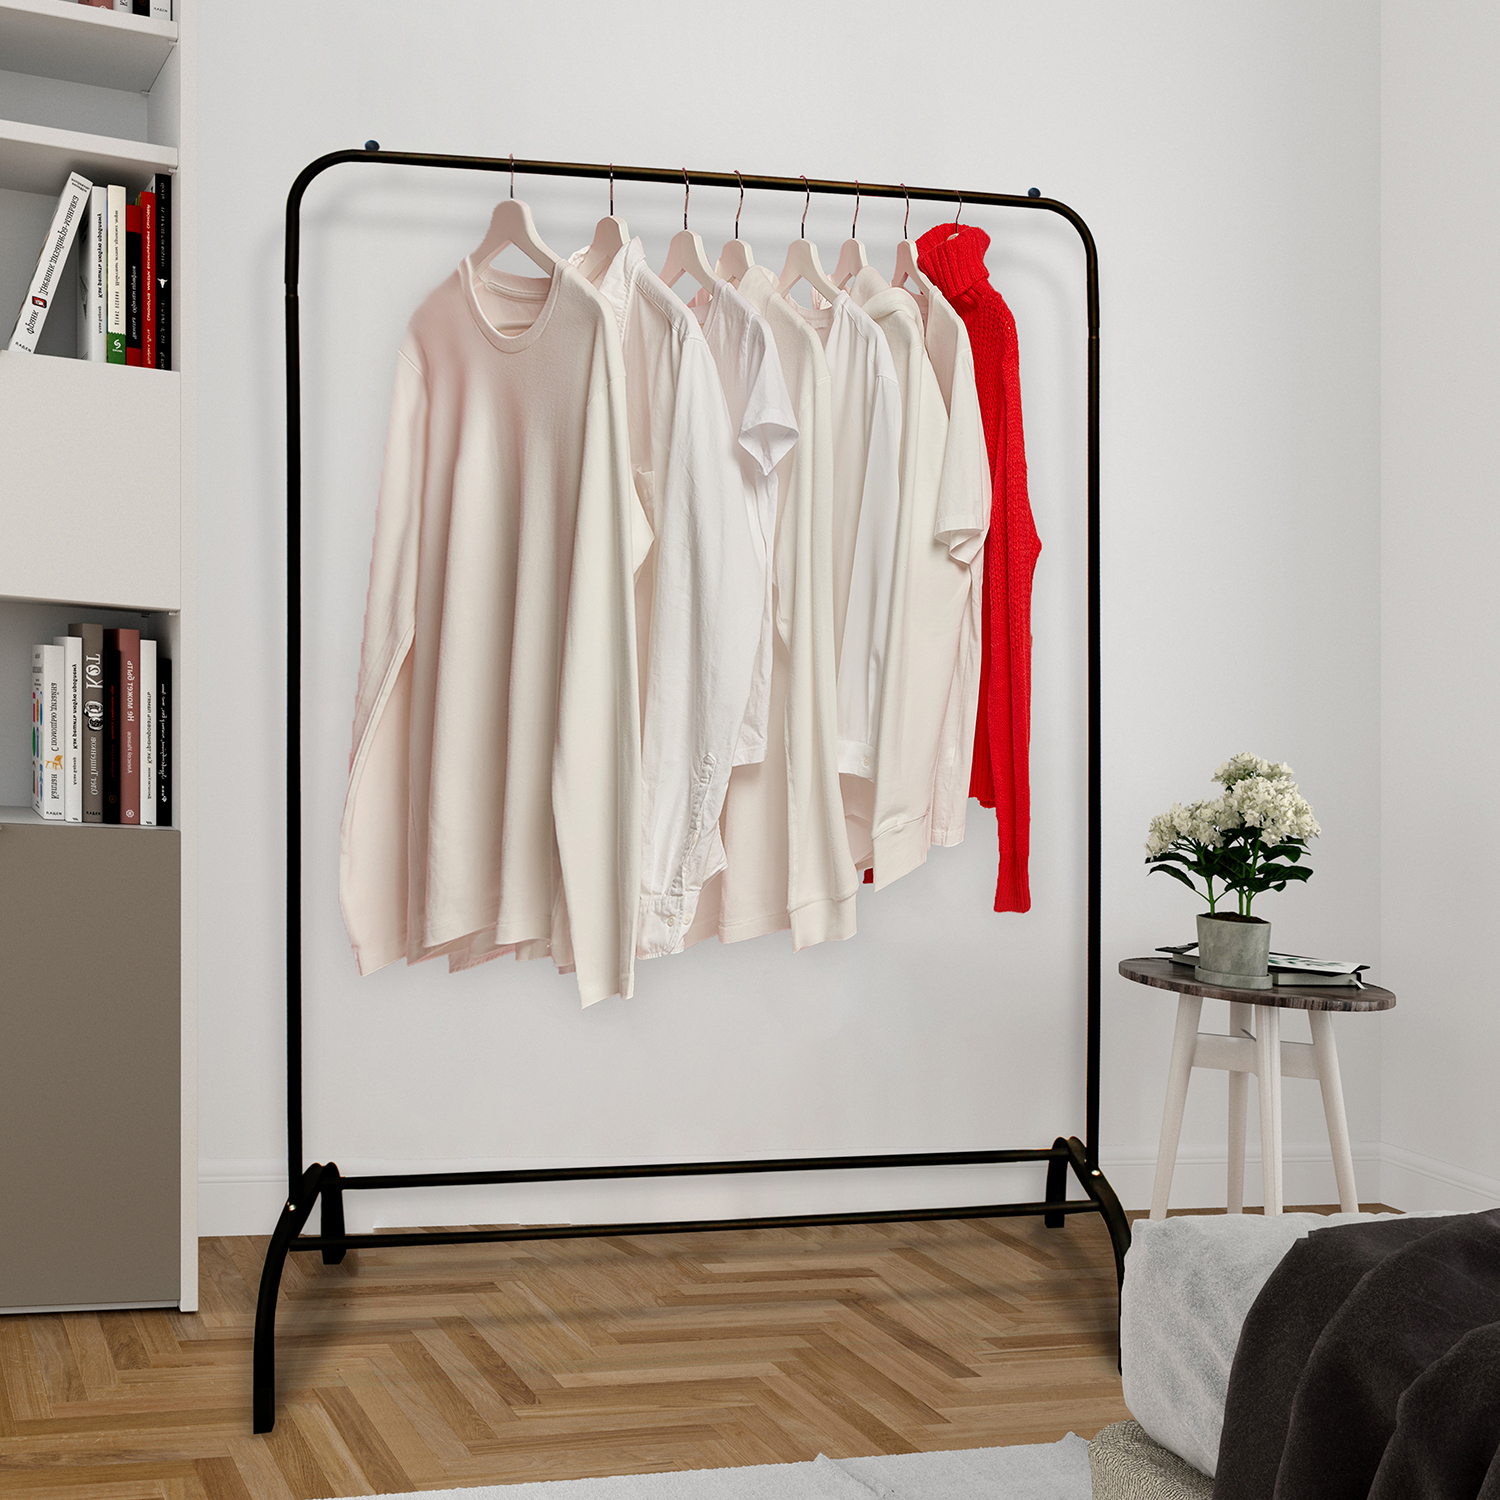 Aso Single Pole Cloth Rack